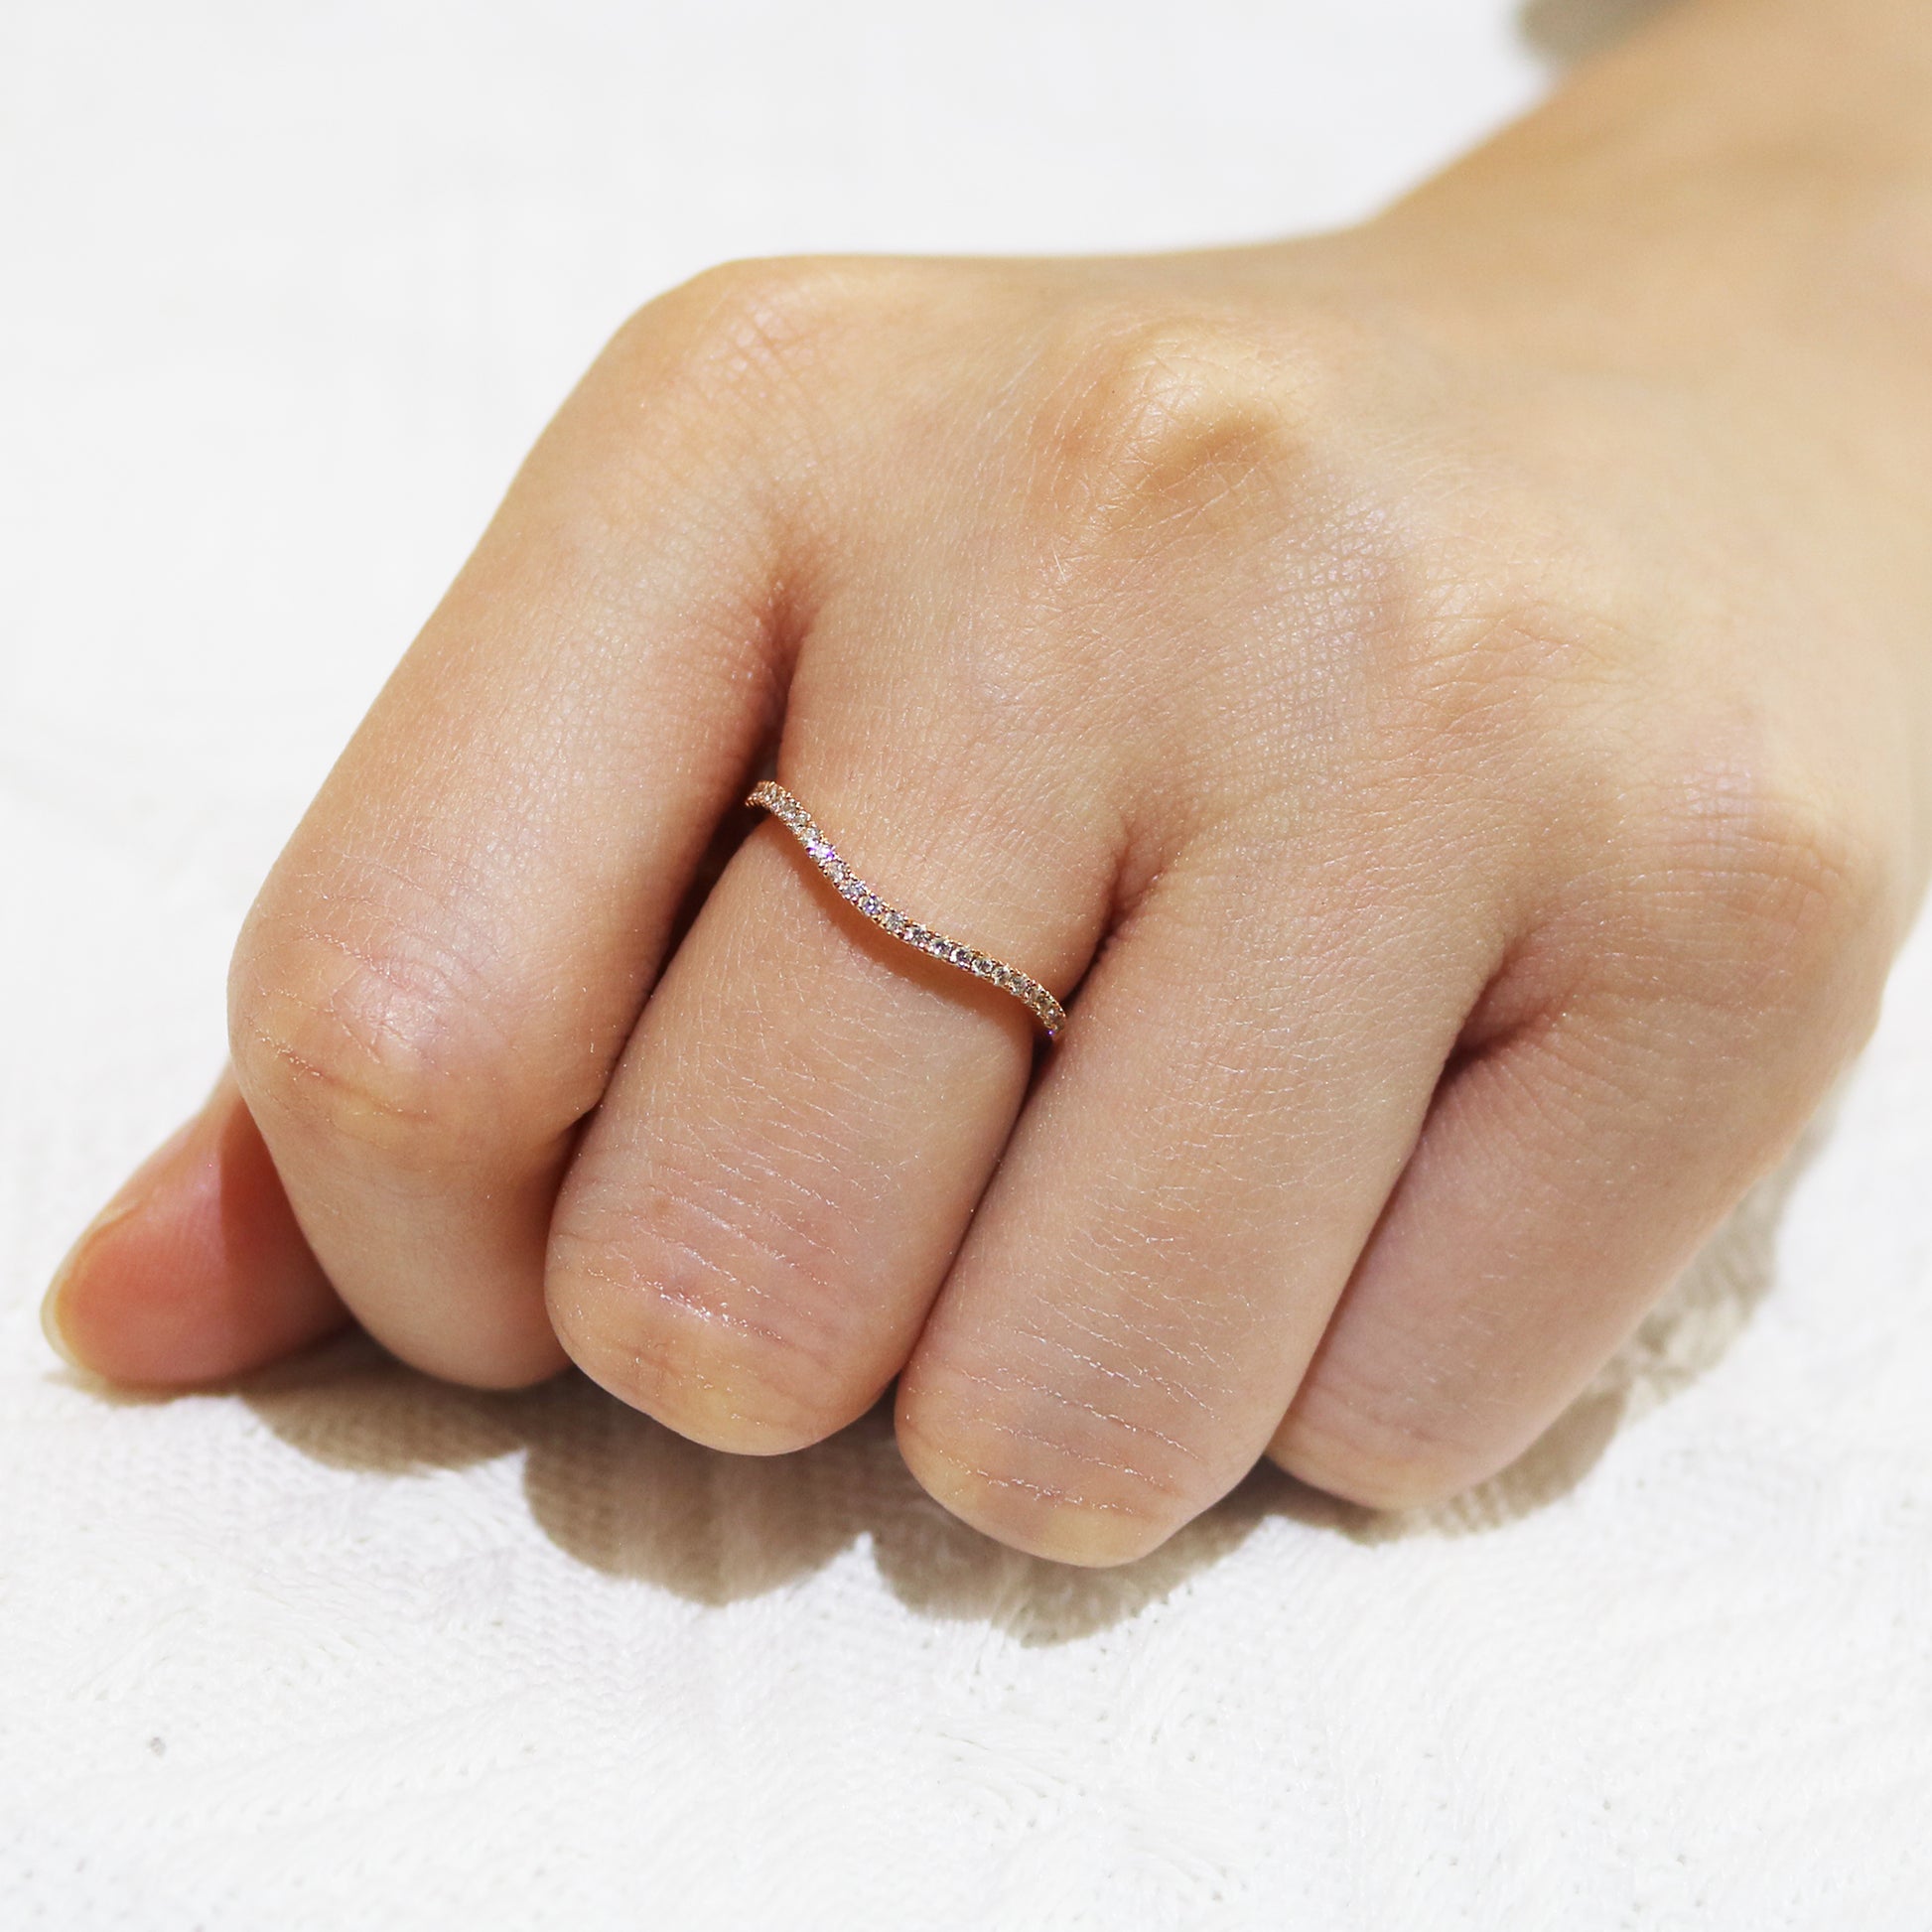 18k玫瑰金波浪造型鑽石戒指在中指上 18k Rose Gold Wavy Diamond Eternity Ring on middle finger